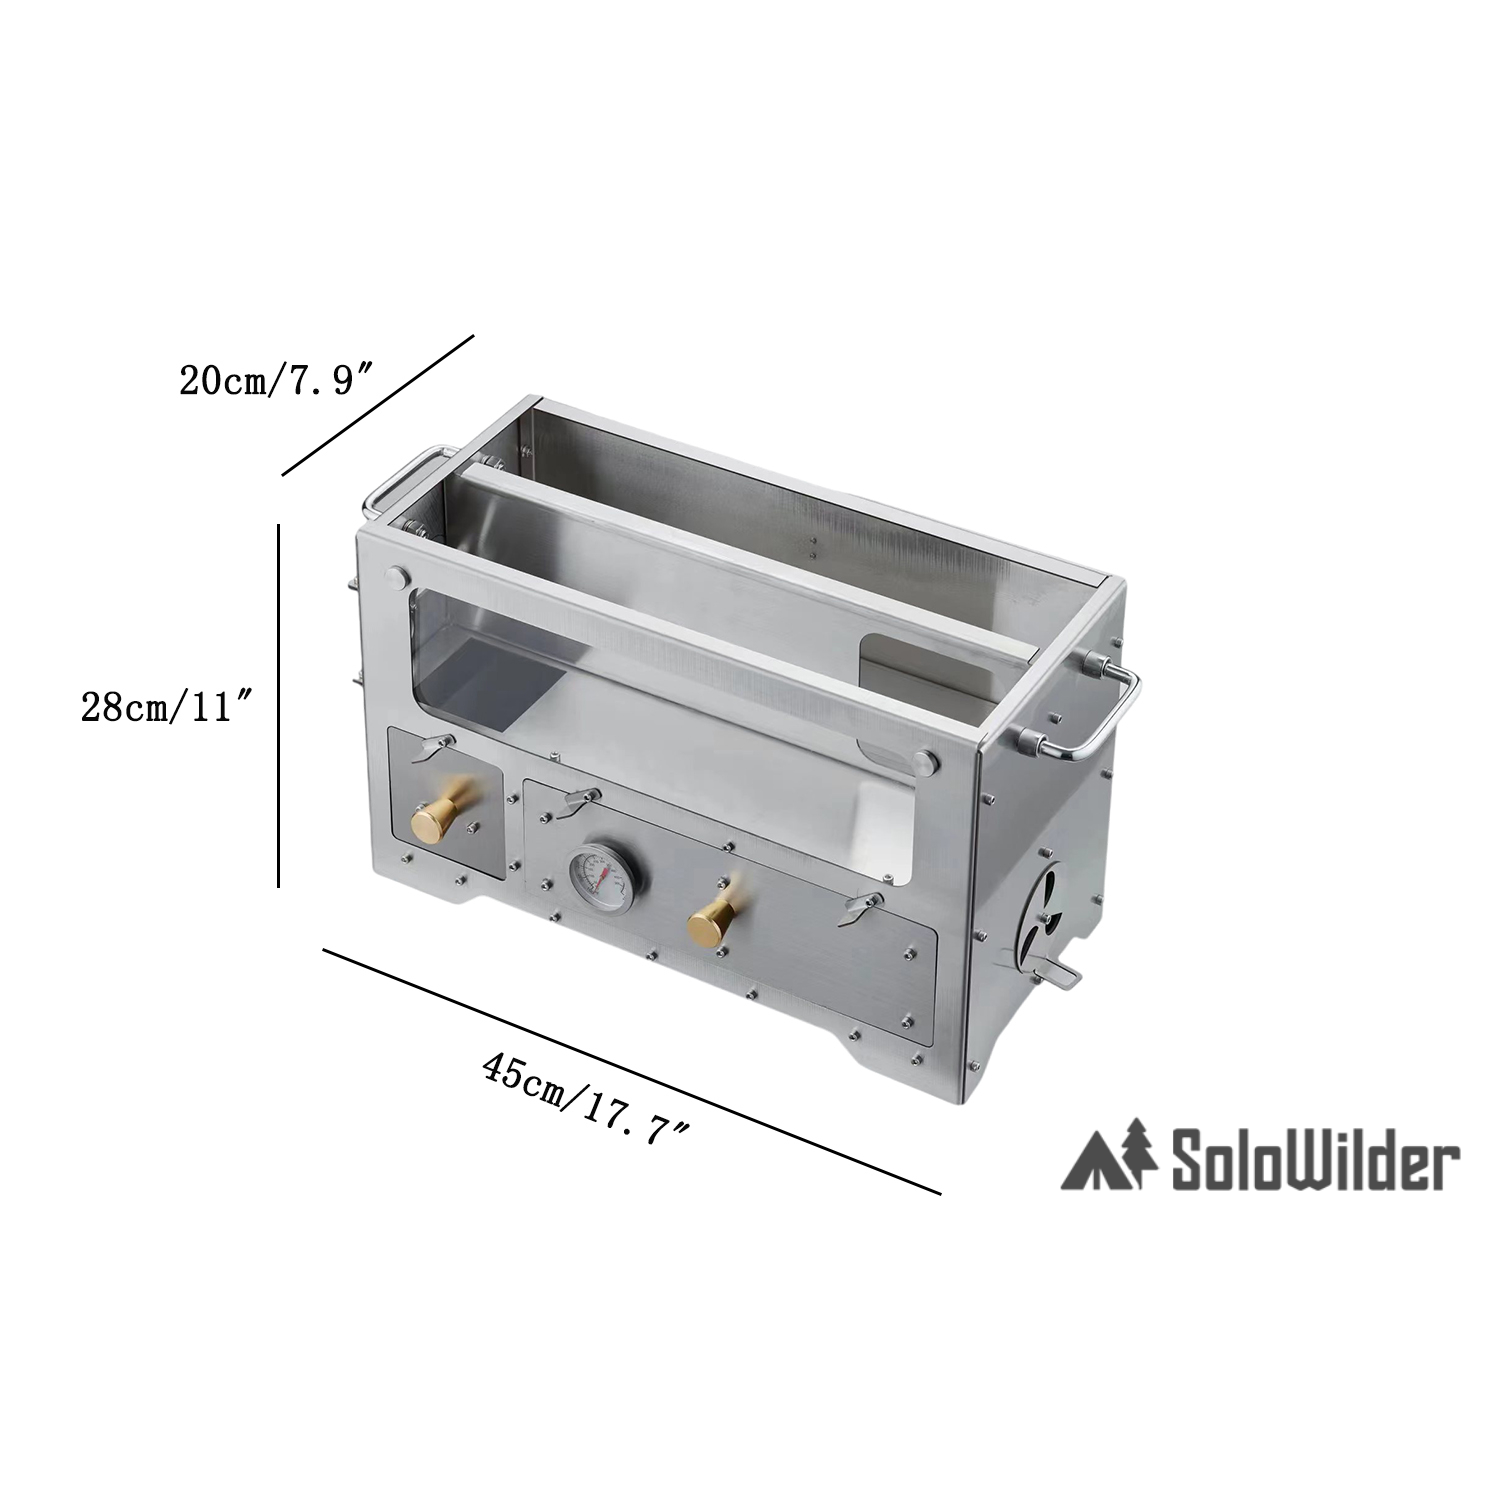 SoloWilder outdoor pellet stove firebox size